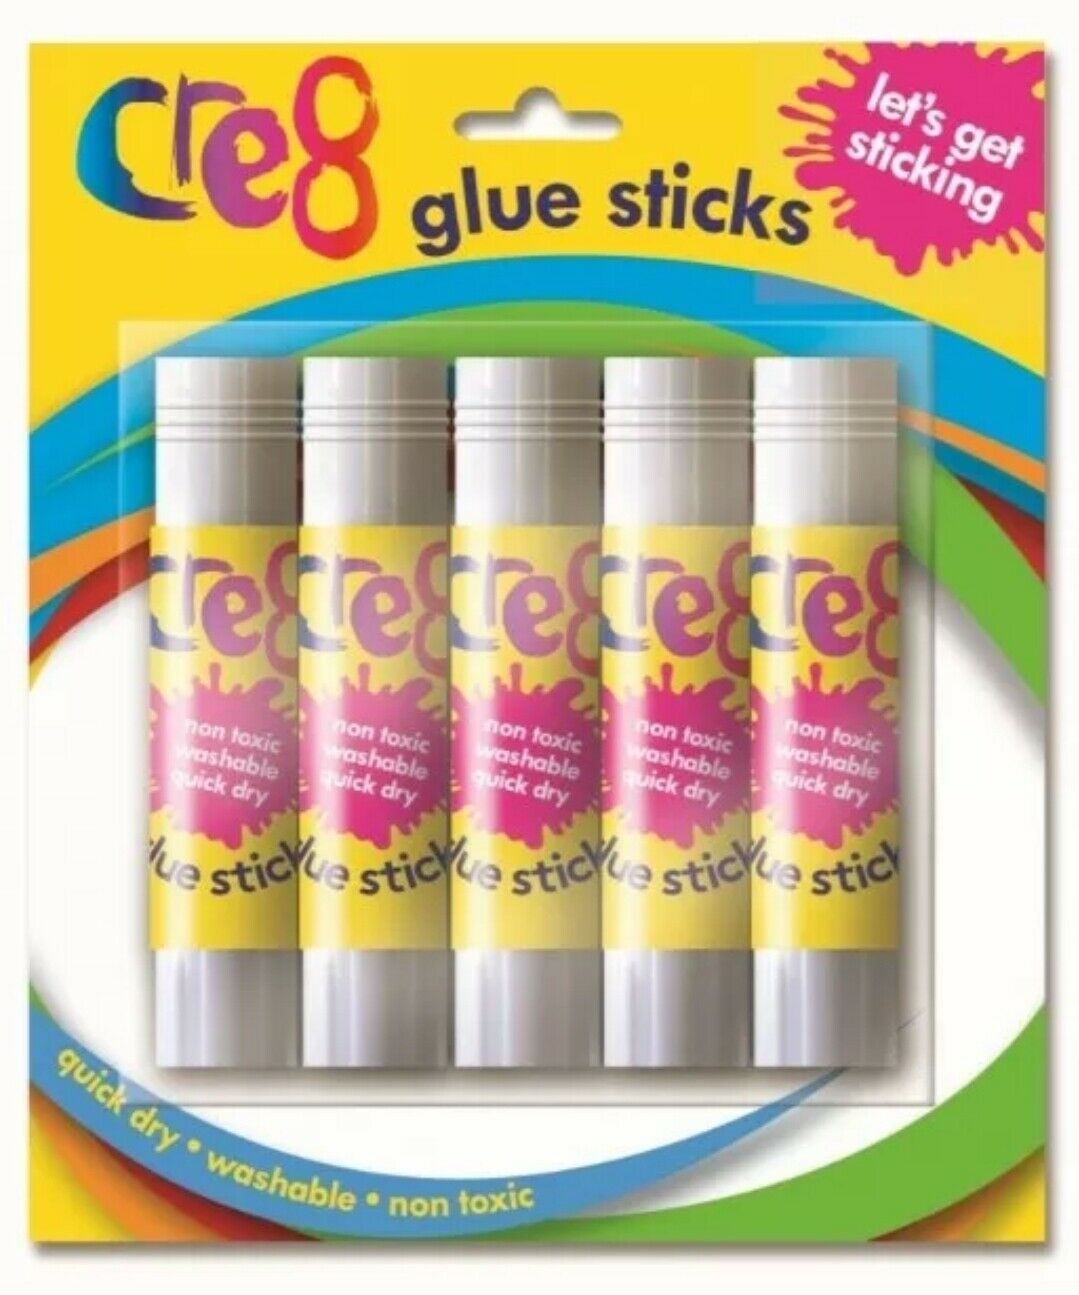 cre8-glue-sticks.jpg